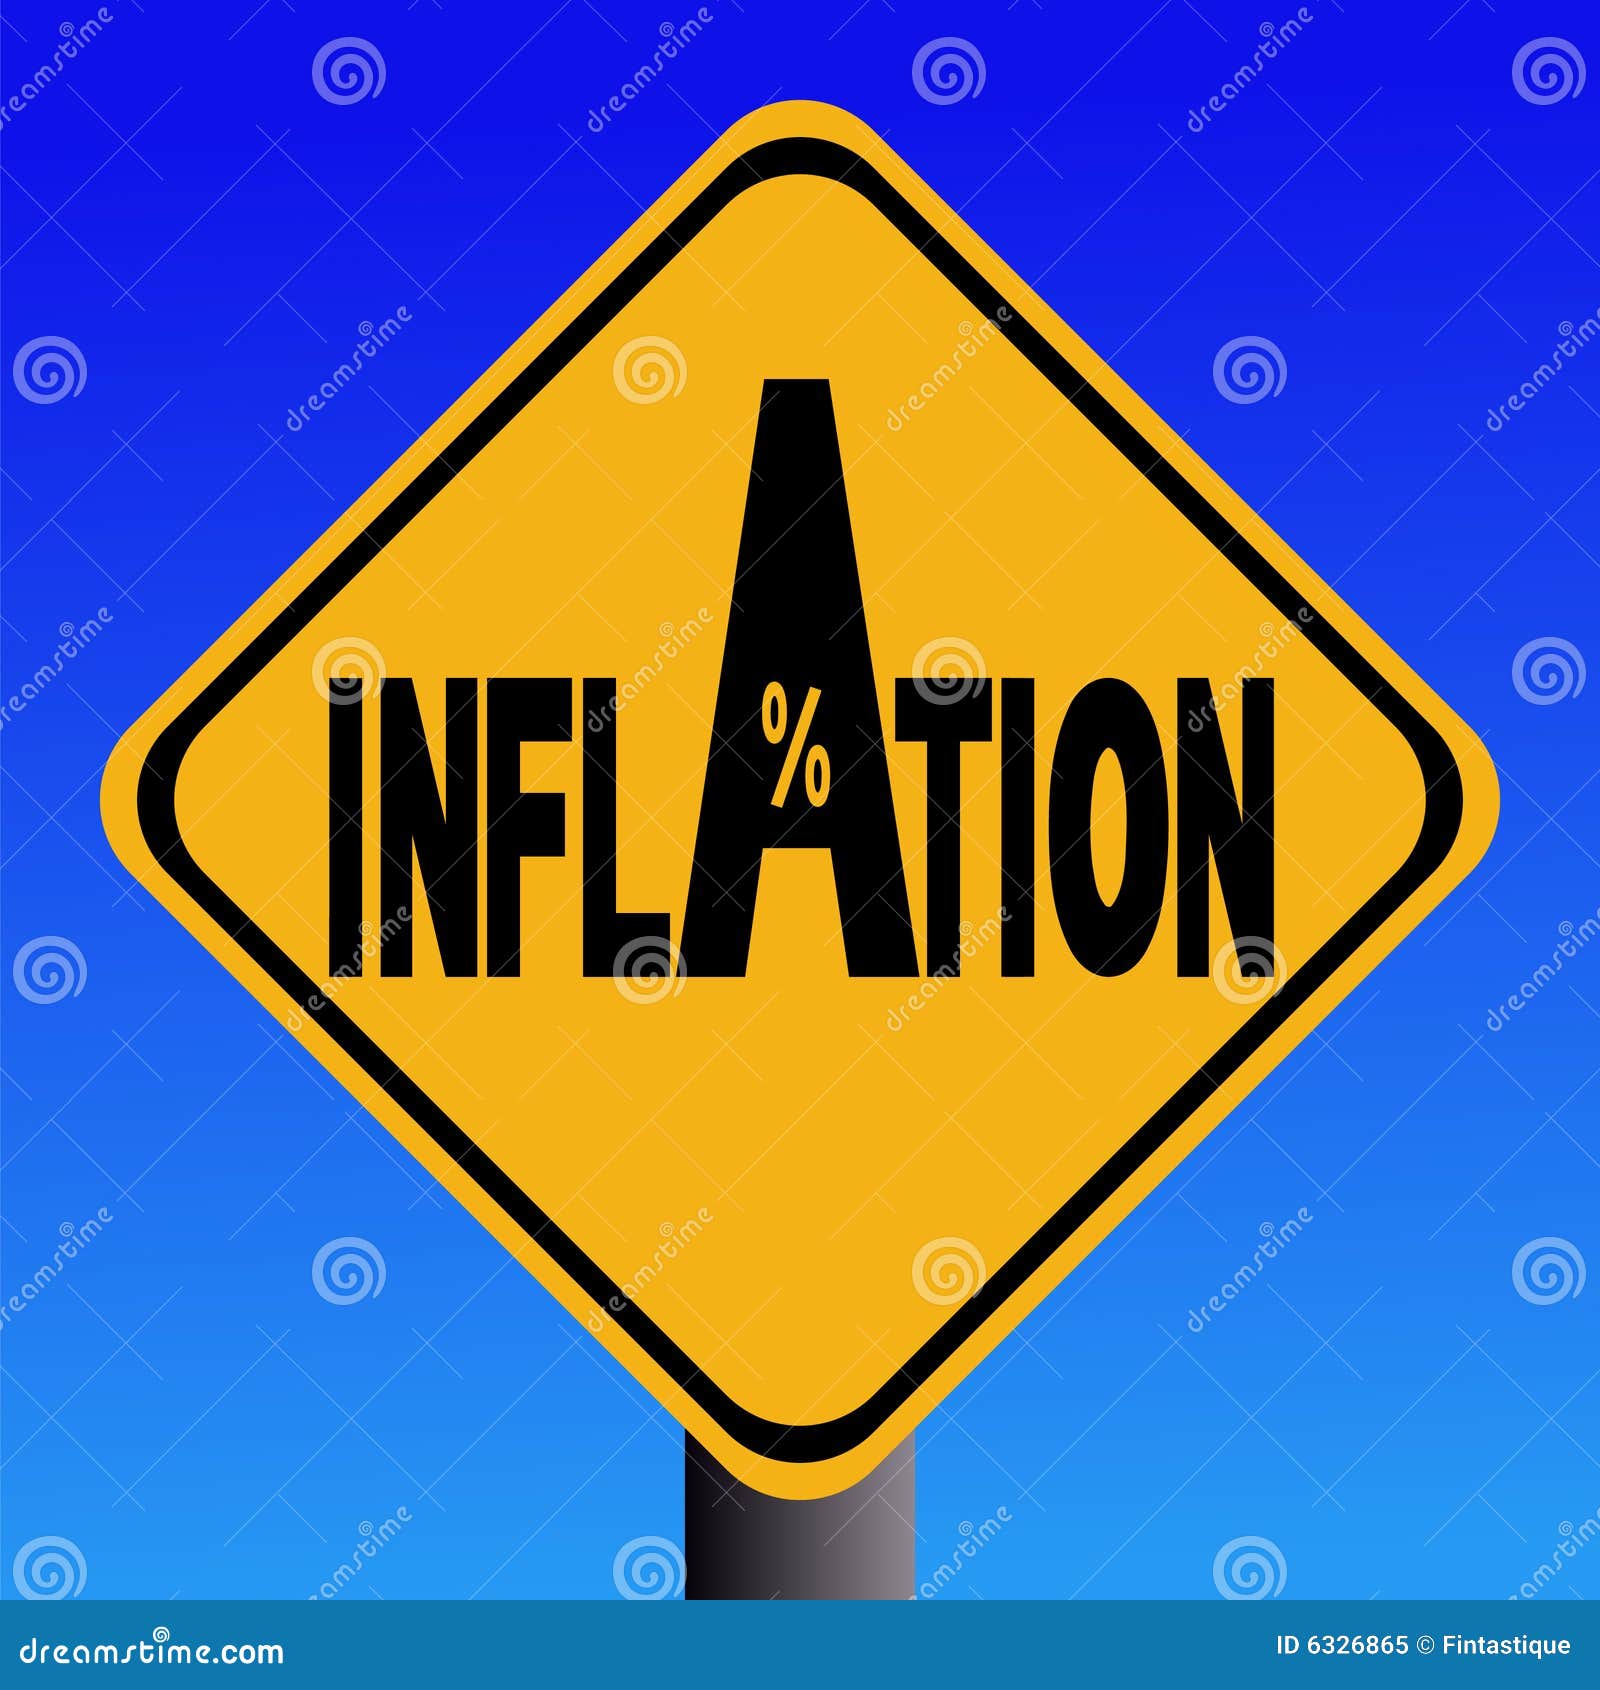 inflation warning sign